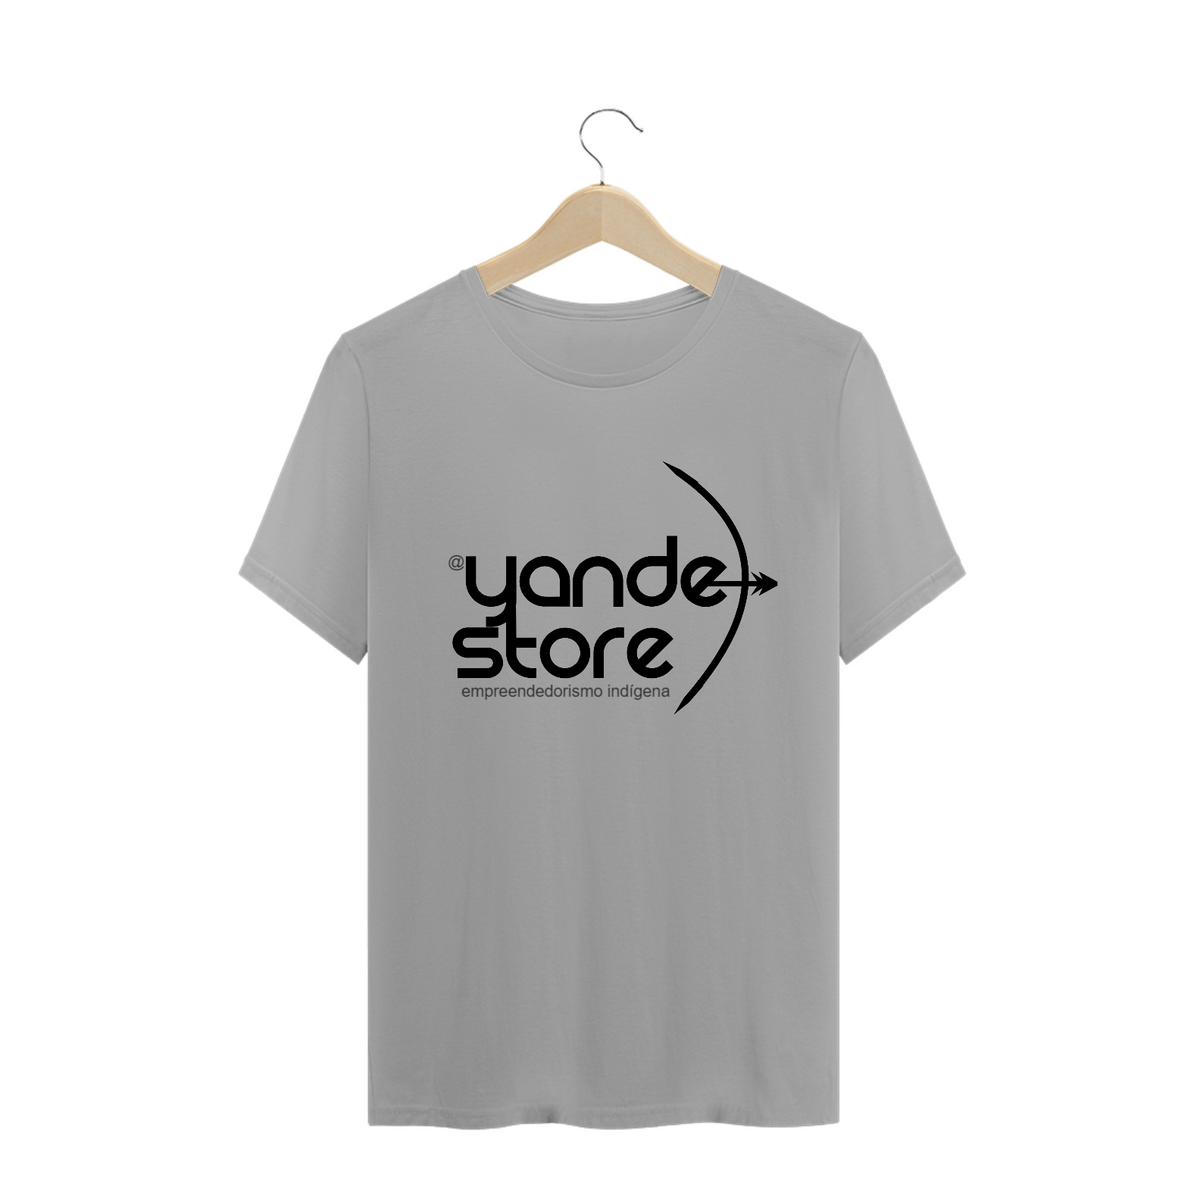 Nome do produto: Empreendedorismo indígena - Yande Store